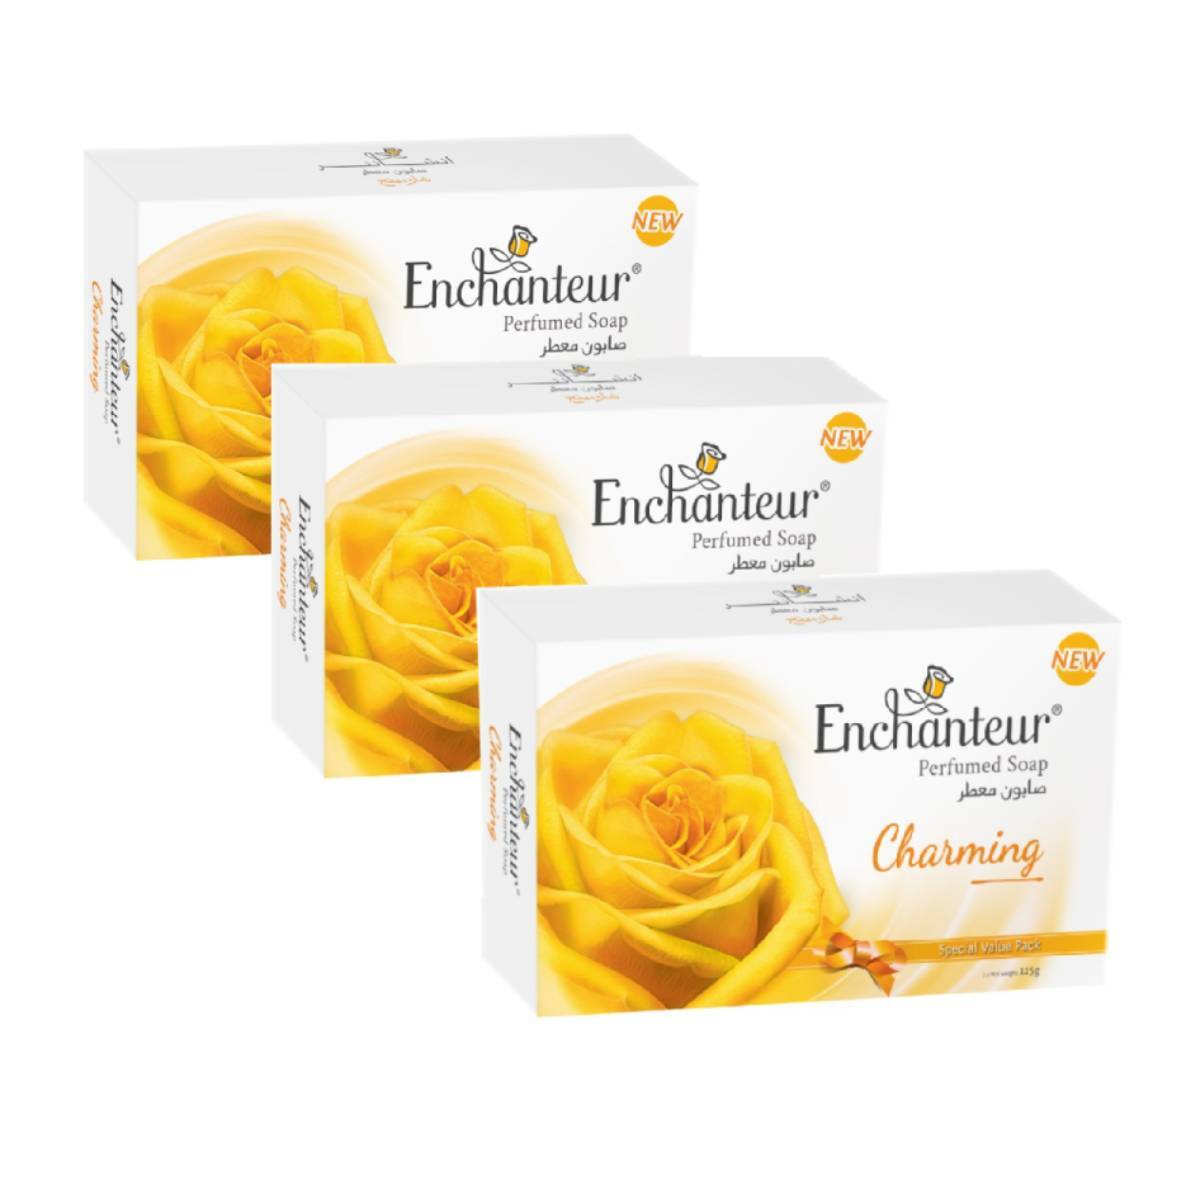 Enchanteur Charming Perfumed Soap Value Pack 3 x 125 g